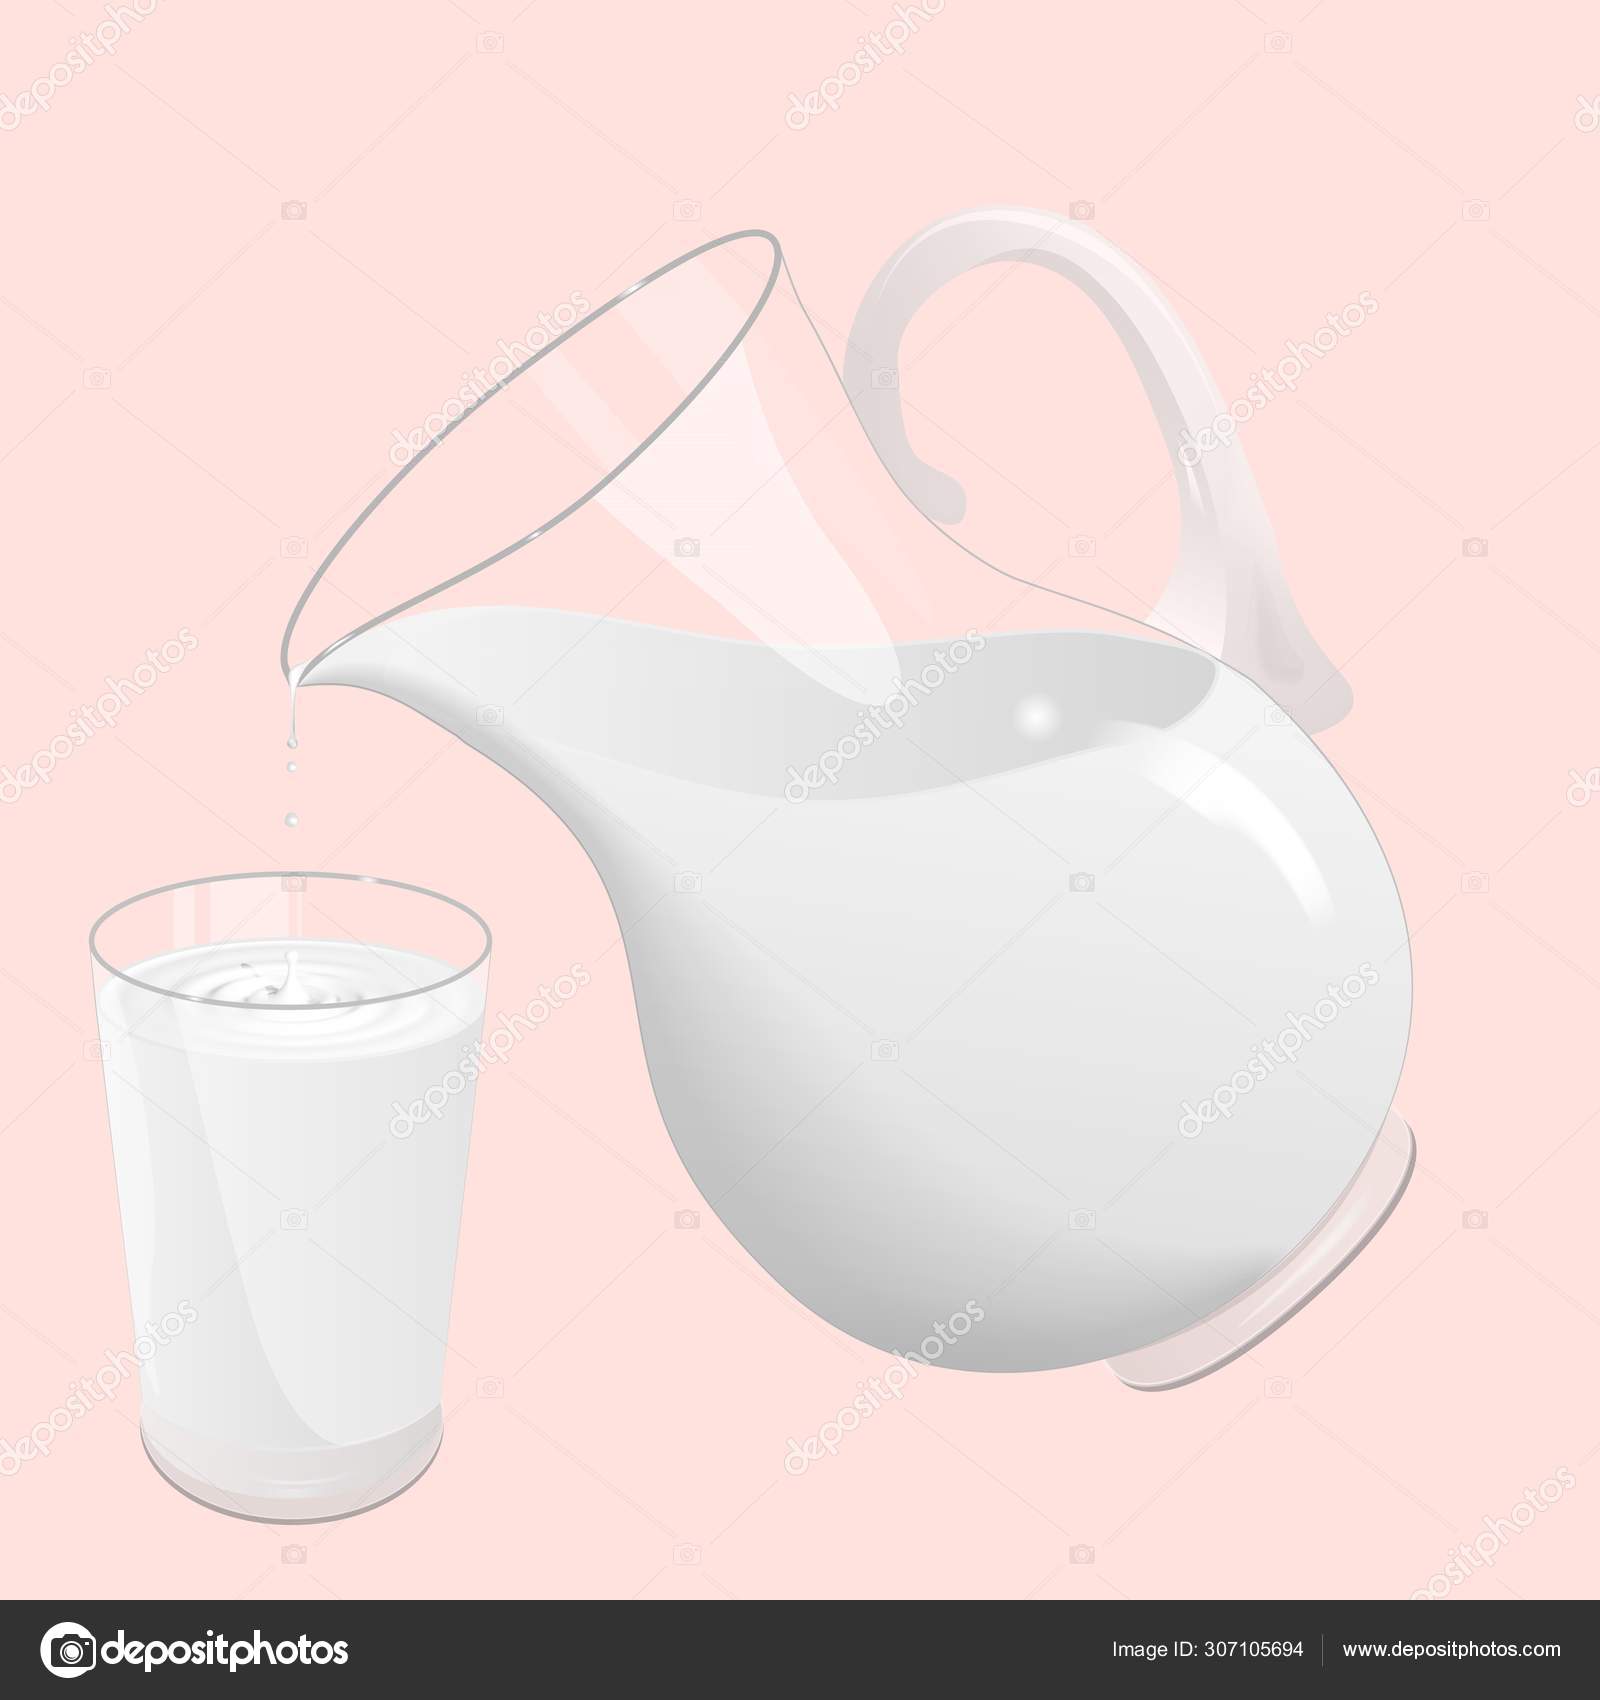 https://st4.depositphotos.com/1672846/30710/v/1600/depositphotos_307105694-stock-illustration-realistic-jug-of-white-milk.jpg